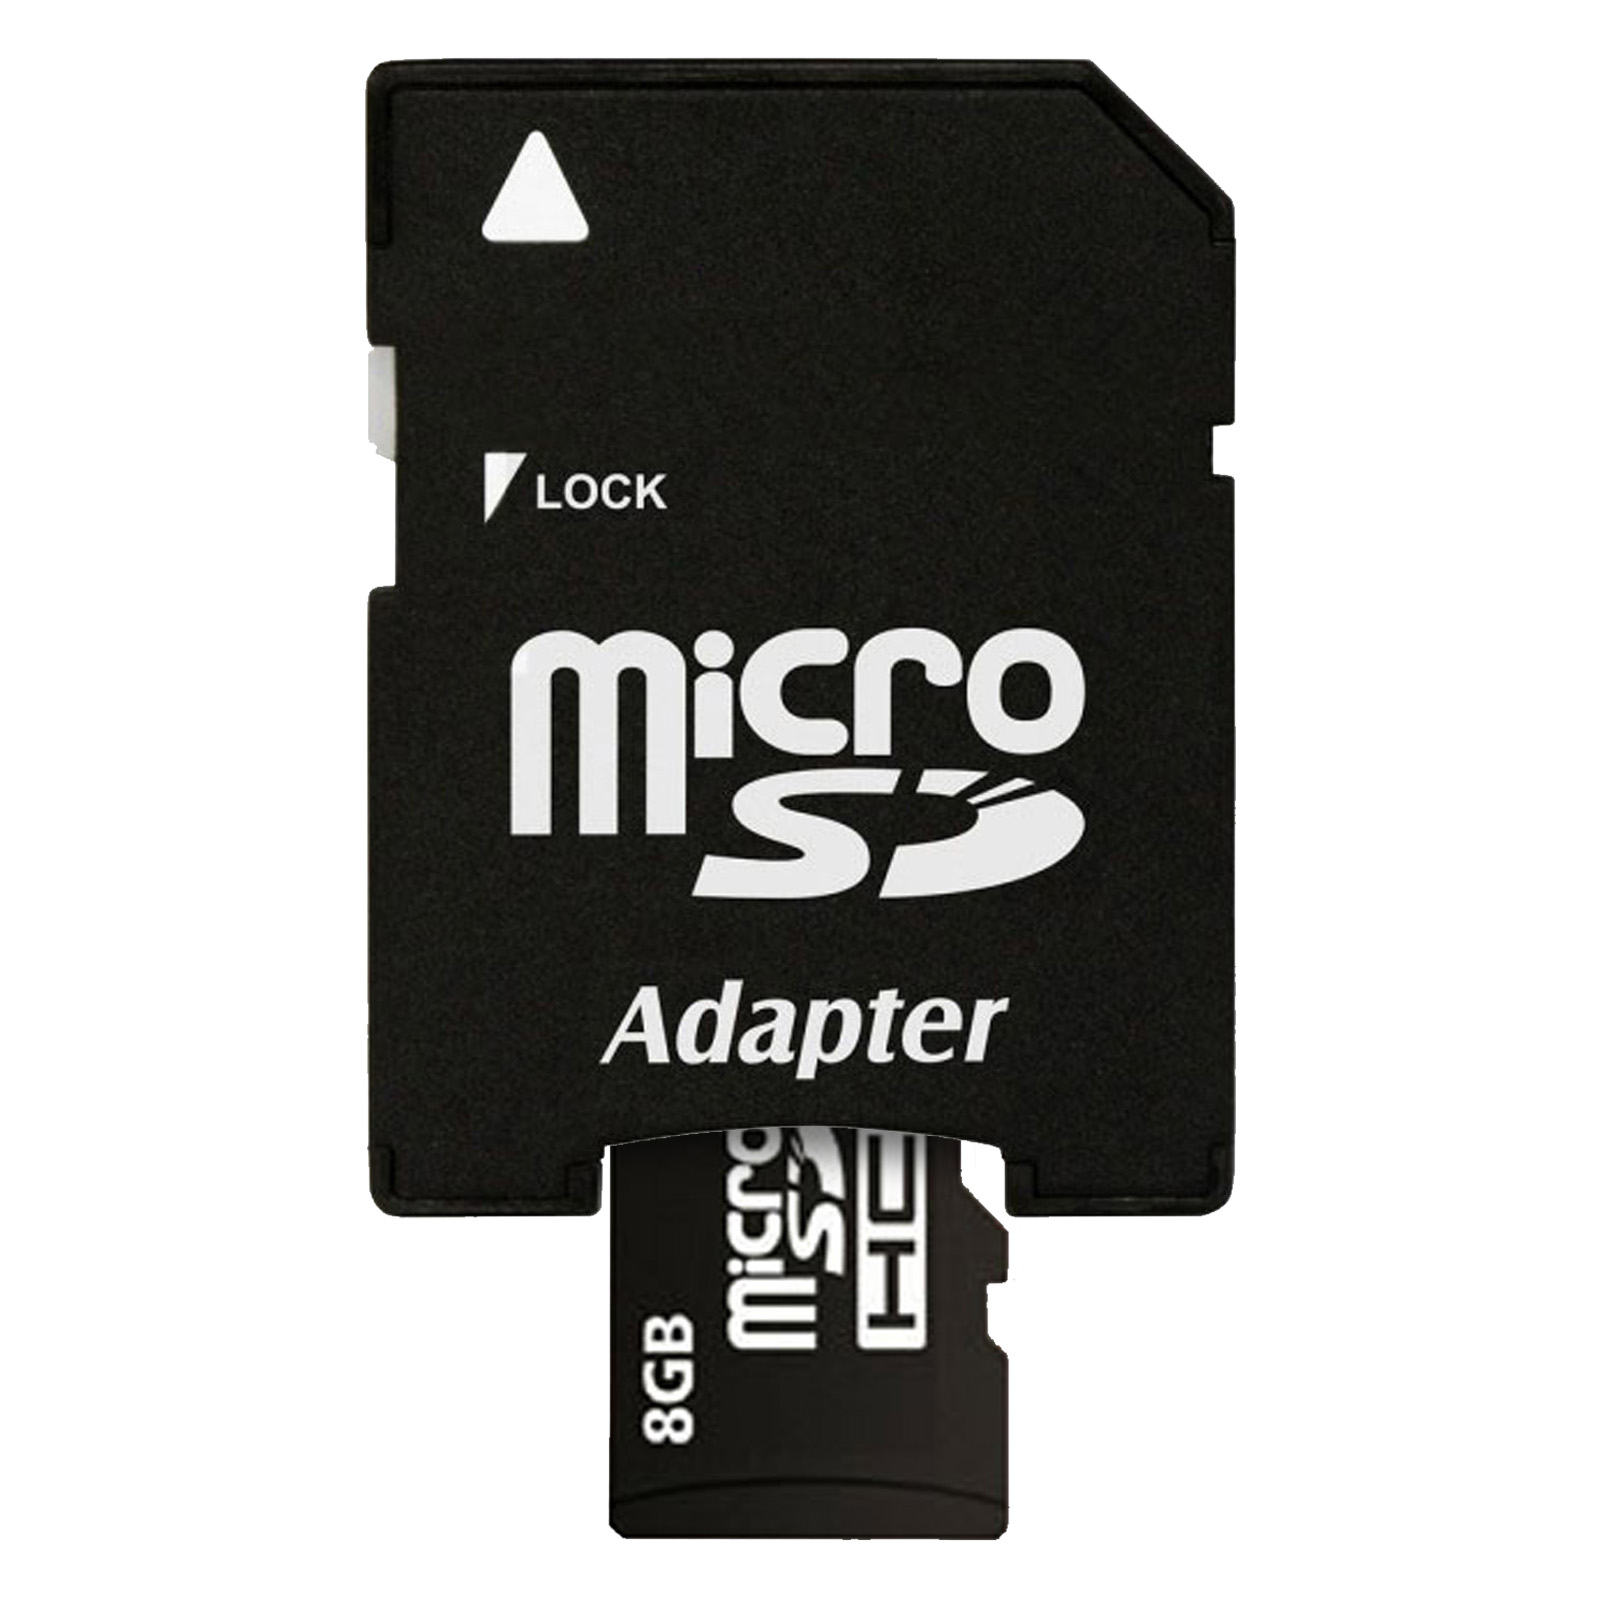 Carte Mémoire Micro-SD 8Go + Adaptateur - Français